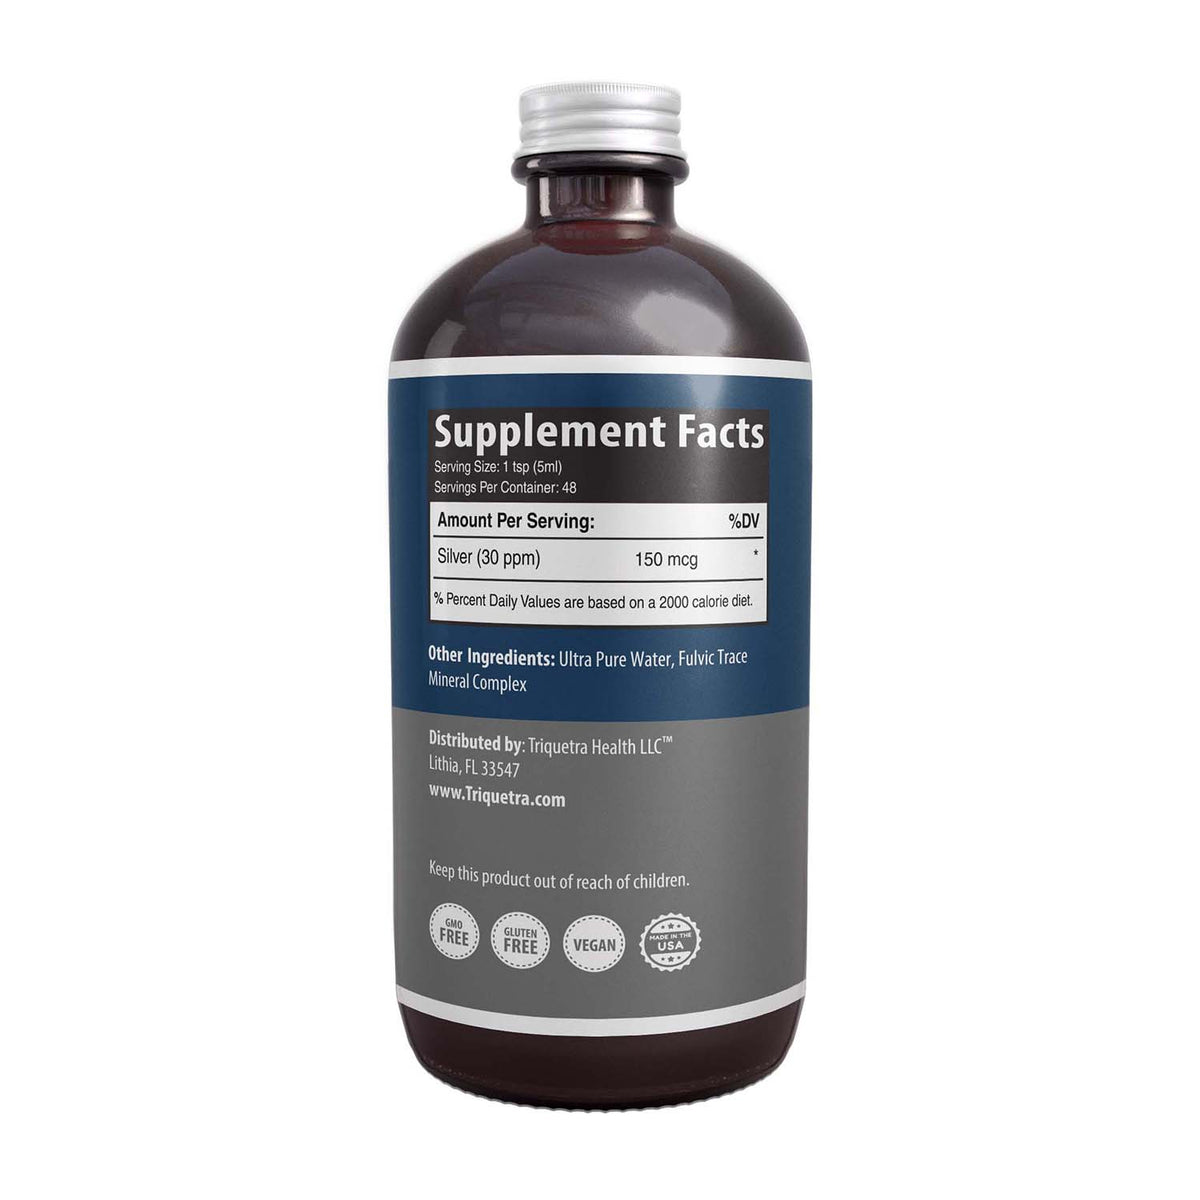 Colloidal Silver Liquid Supplement